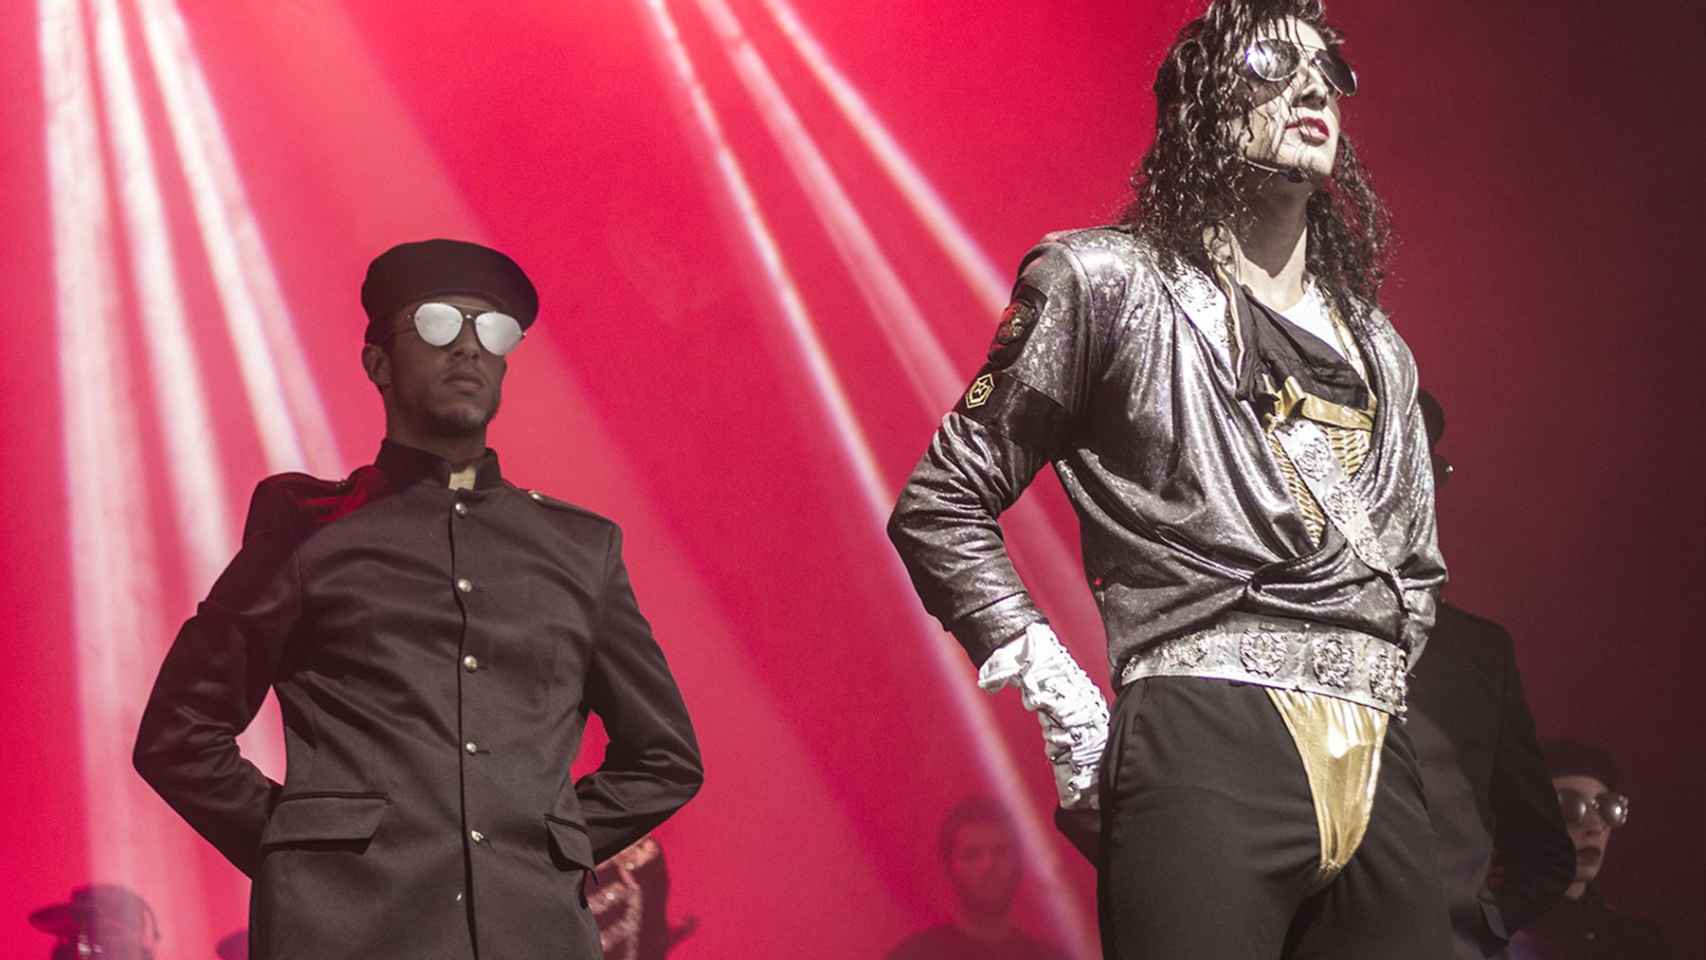 Espectáculo 'I want u back' en homenaje a Michael Jackson / I WANT U BACK